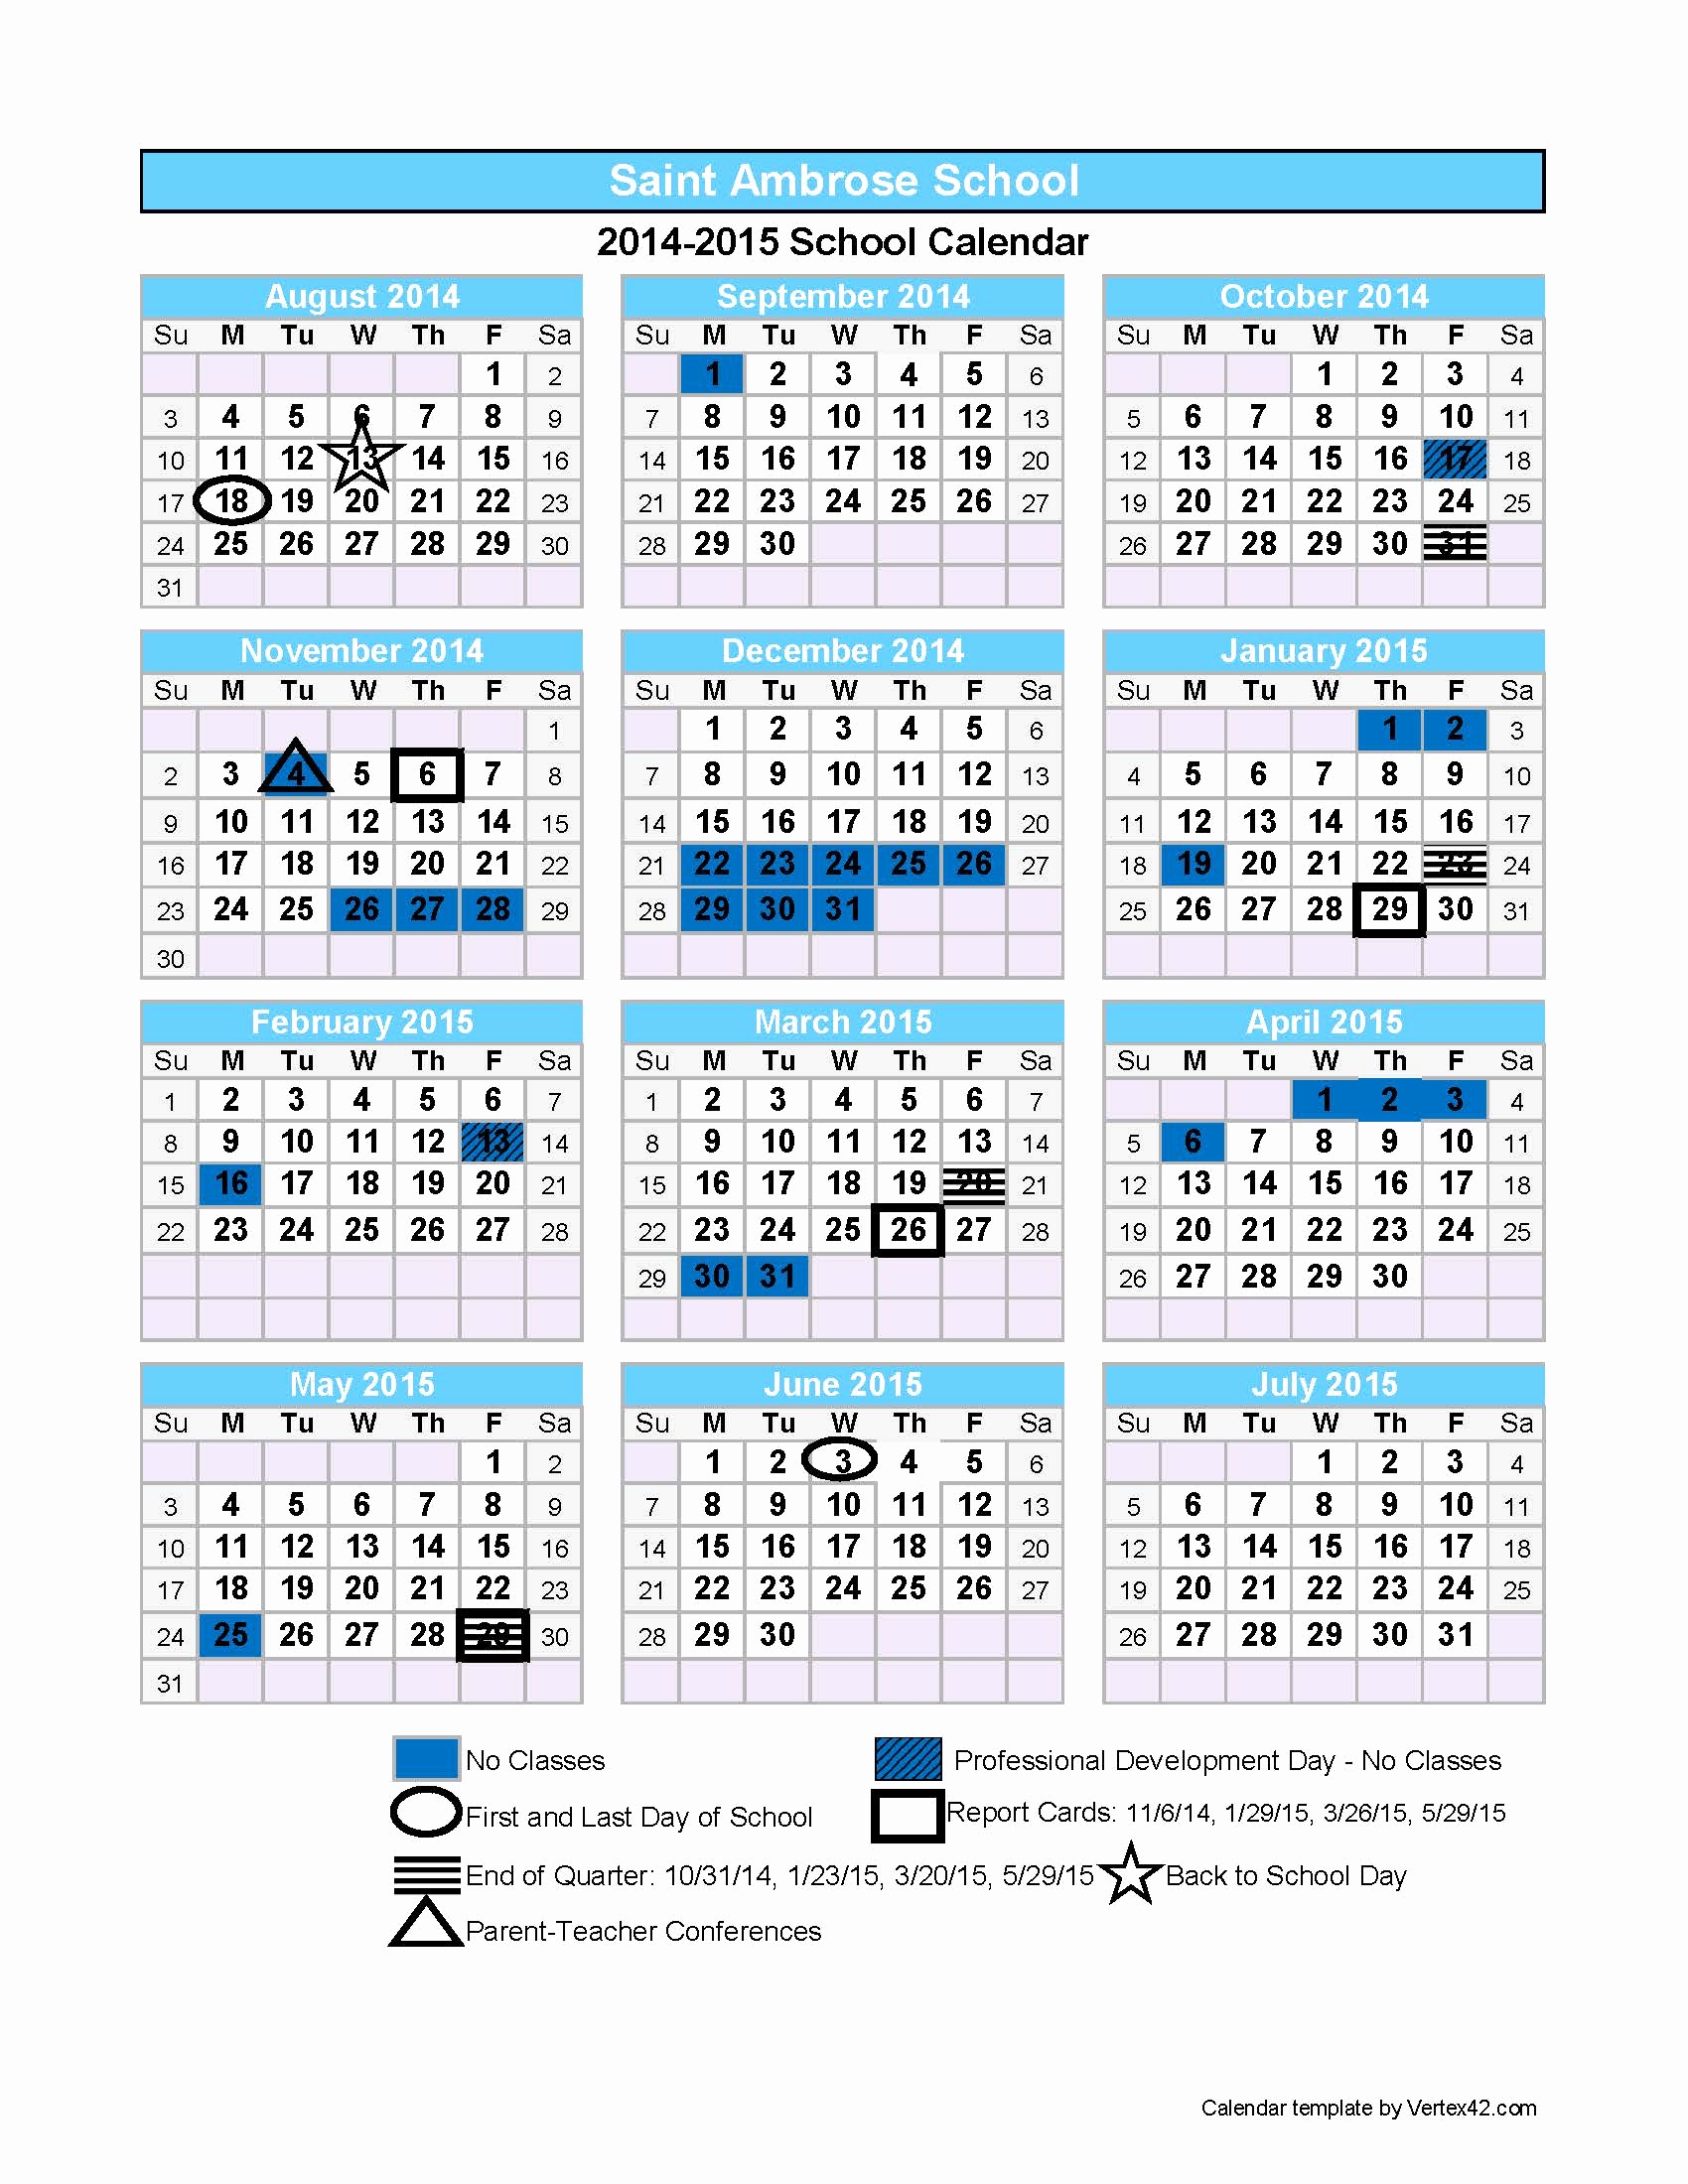 Lehigh Academic Calendar | Qualads